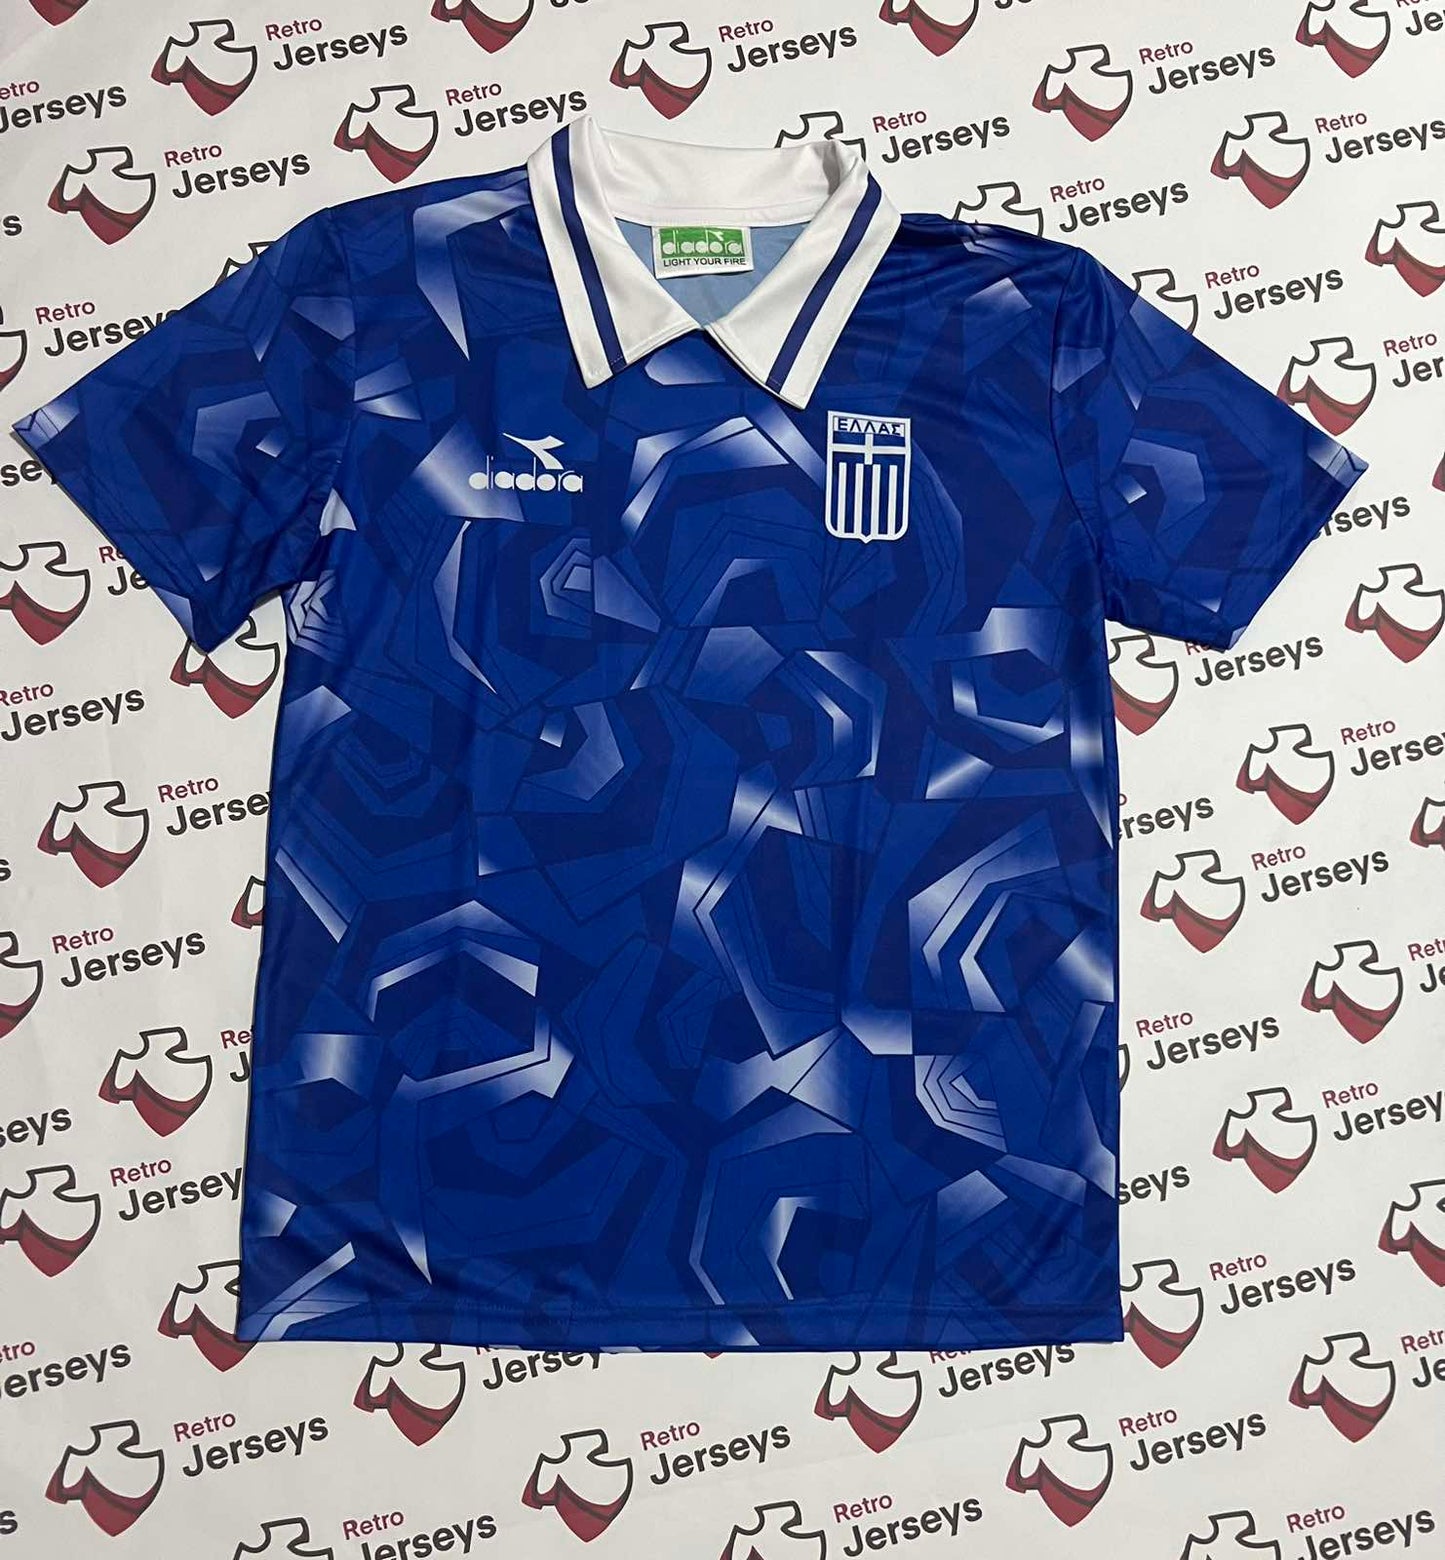 Greece National Shirt 1993-1994 Home - Retro Jerseys, φανέλα Γρεεκε - Retro Jerseys